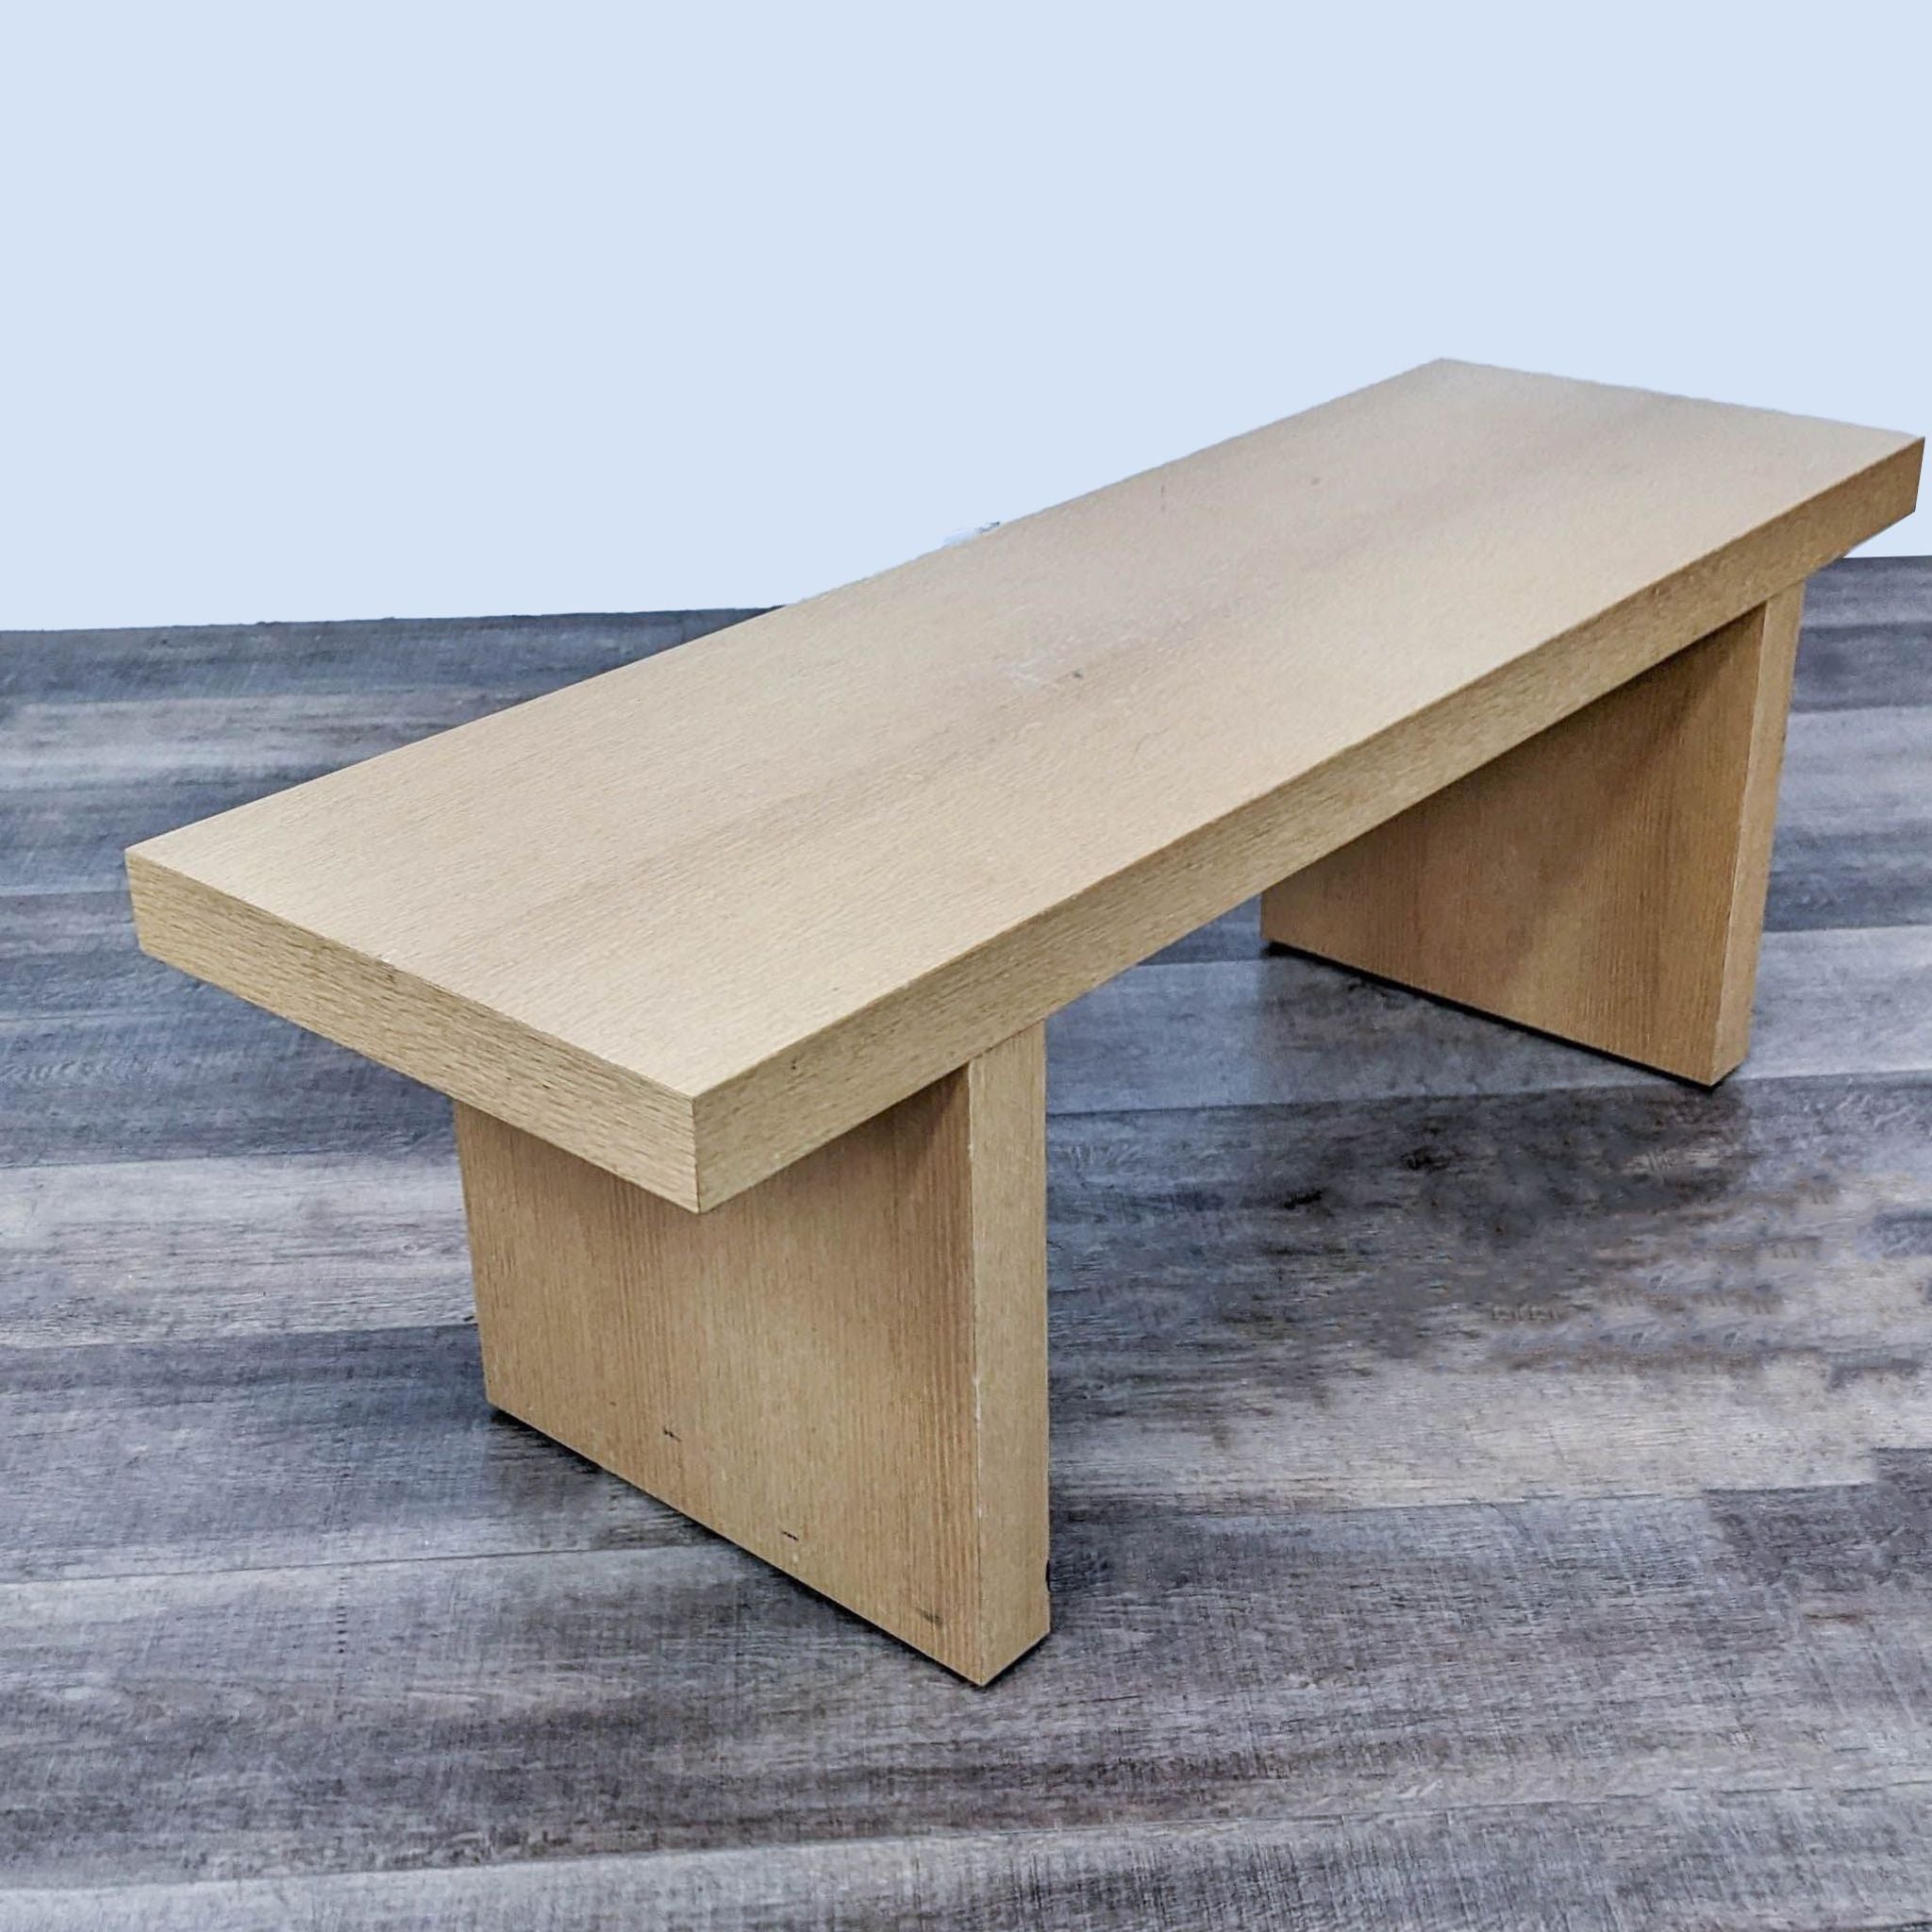 Sleek beech-colored Reperch bench showcasing modern design against a wooden floor, viewed from an angle.